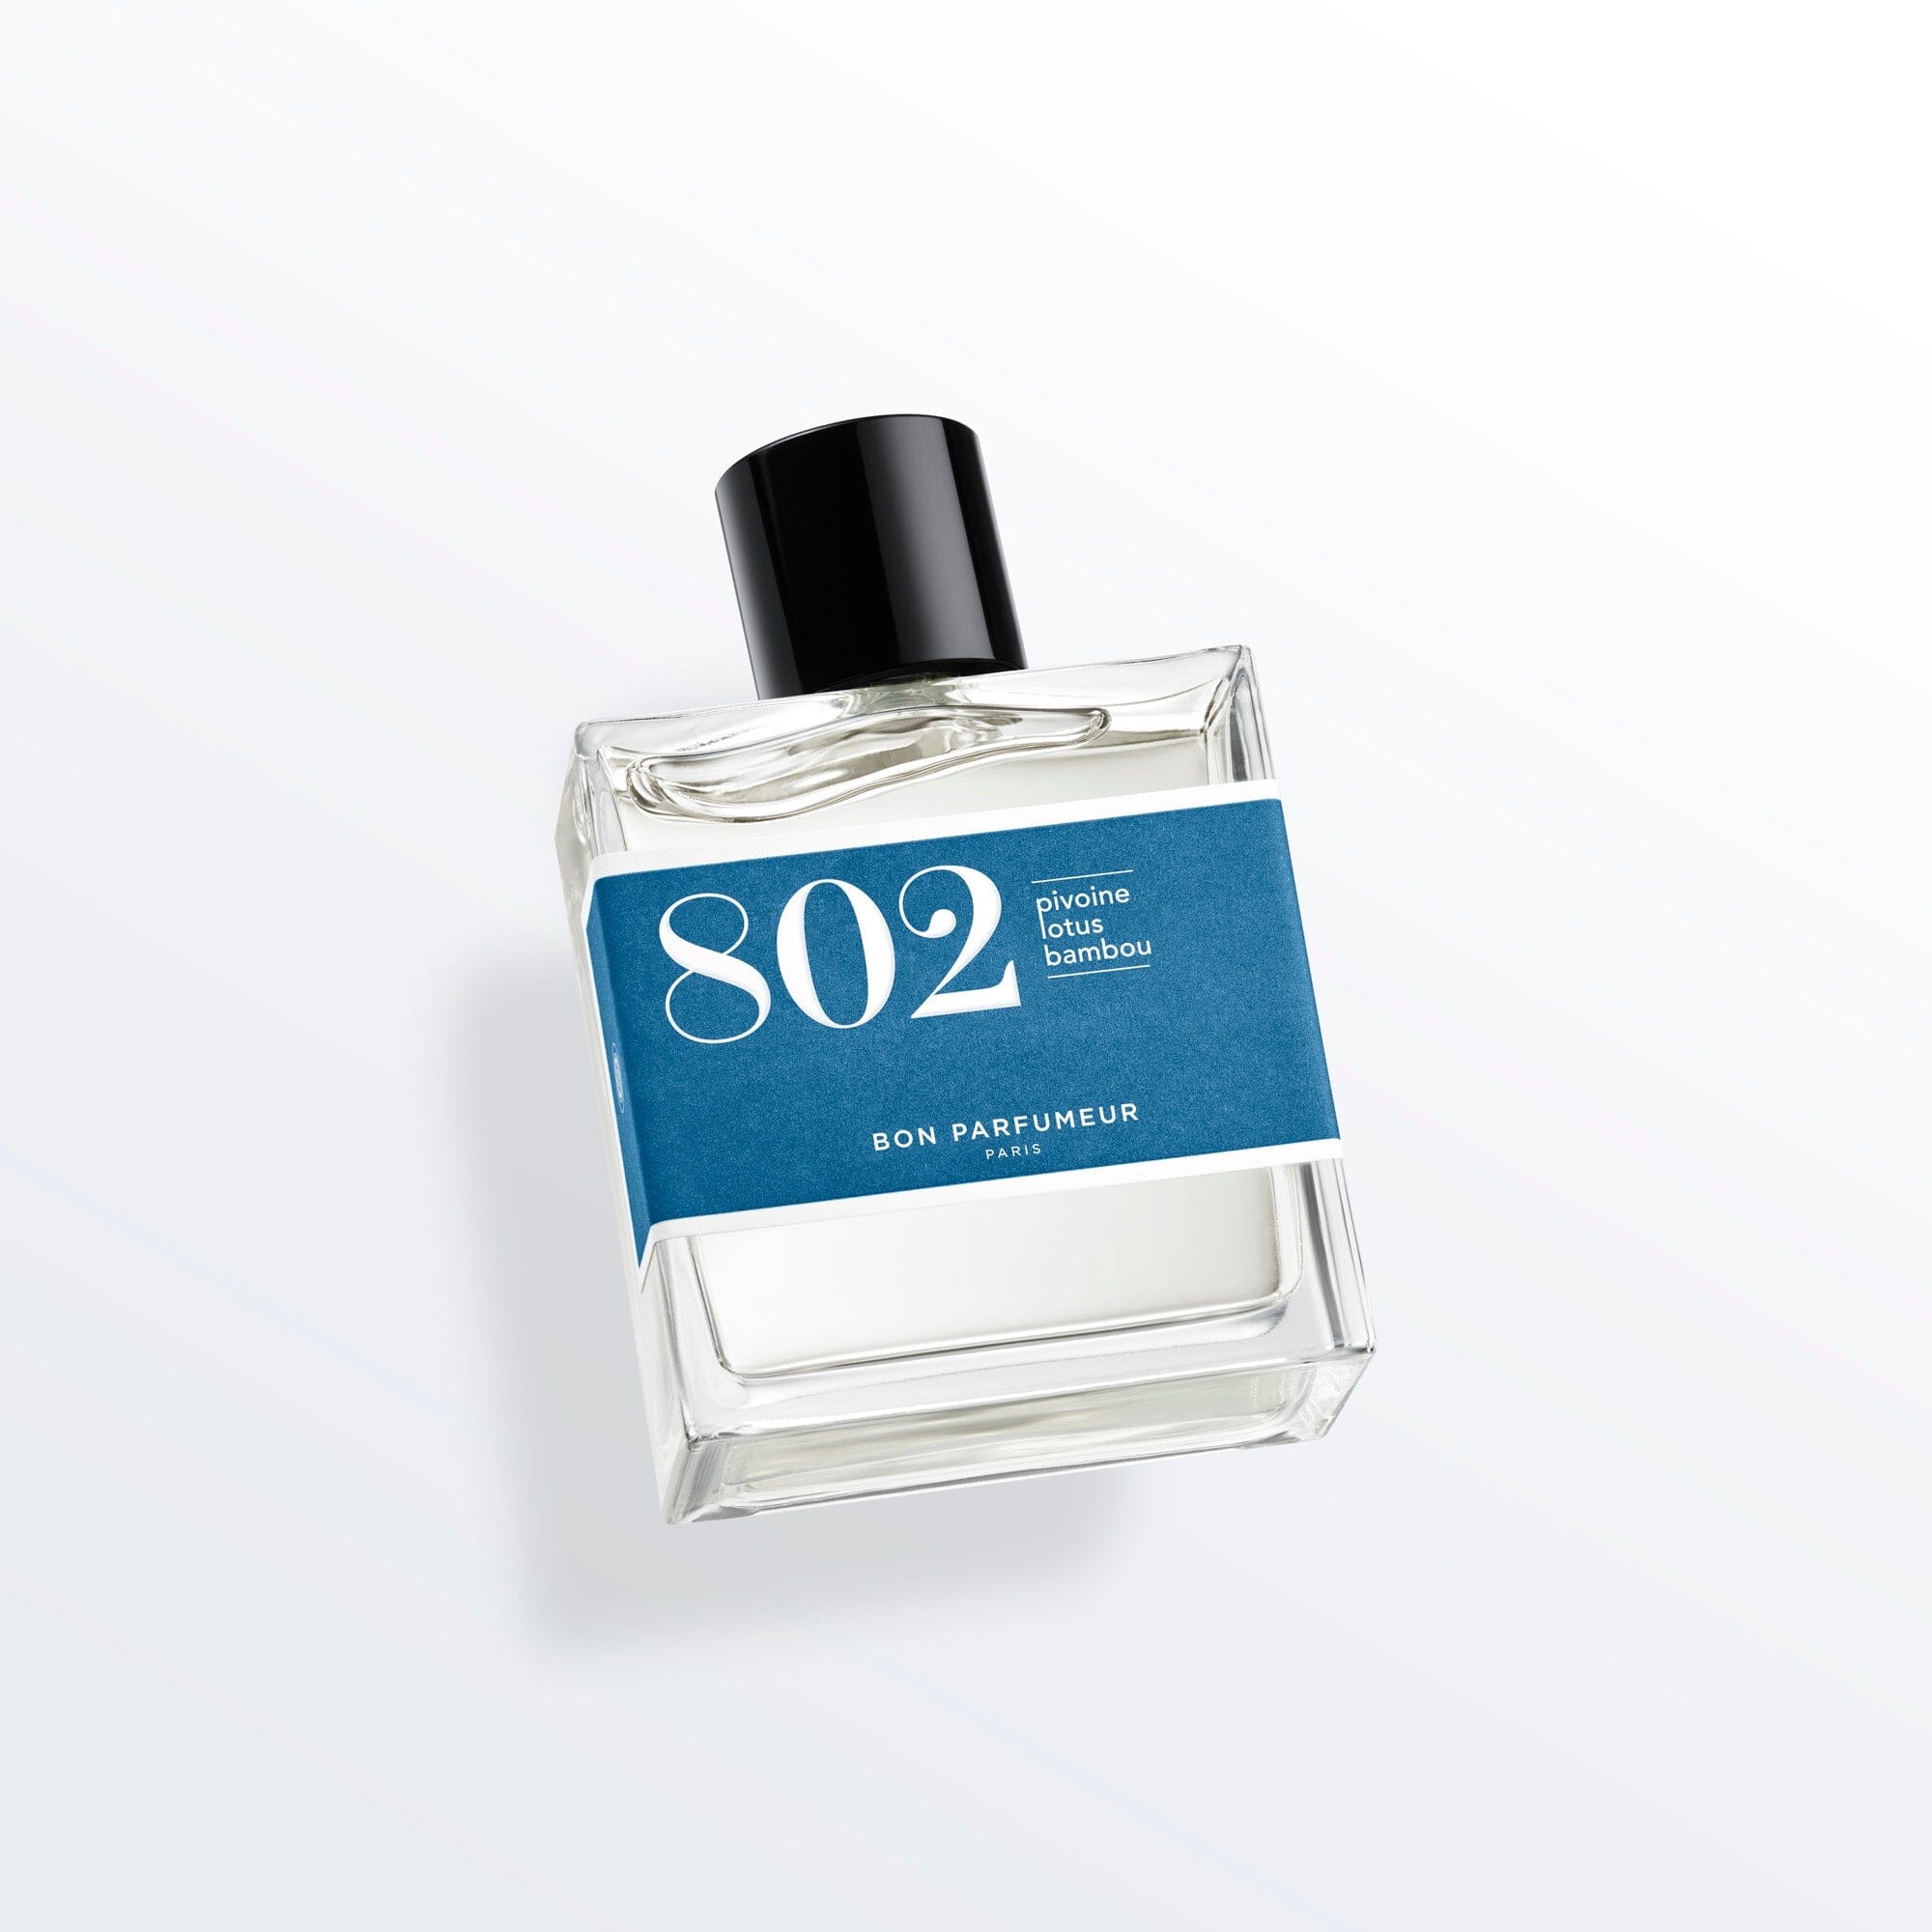 Eau de 802 with peony, lotus and bamboo – Bon Parfumeur